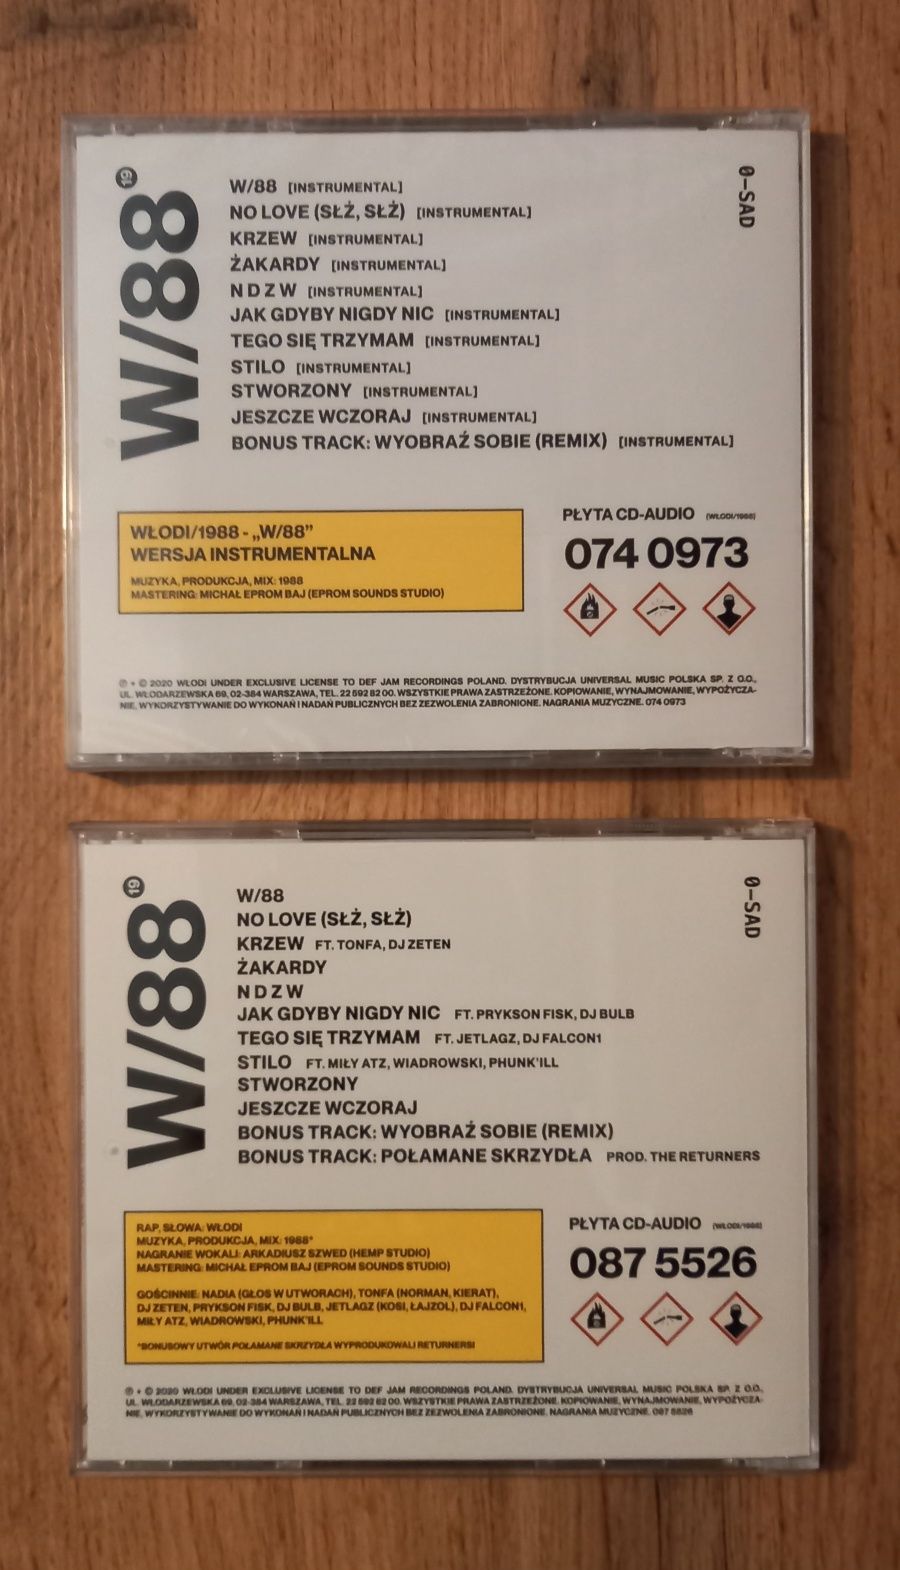 Wlodi - W 88  /  CD